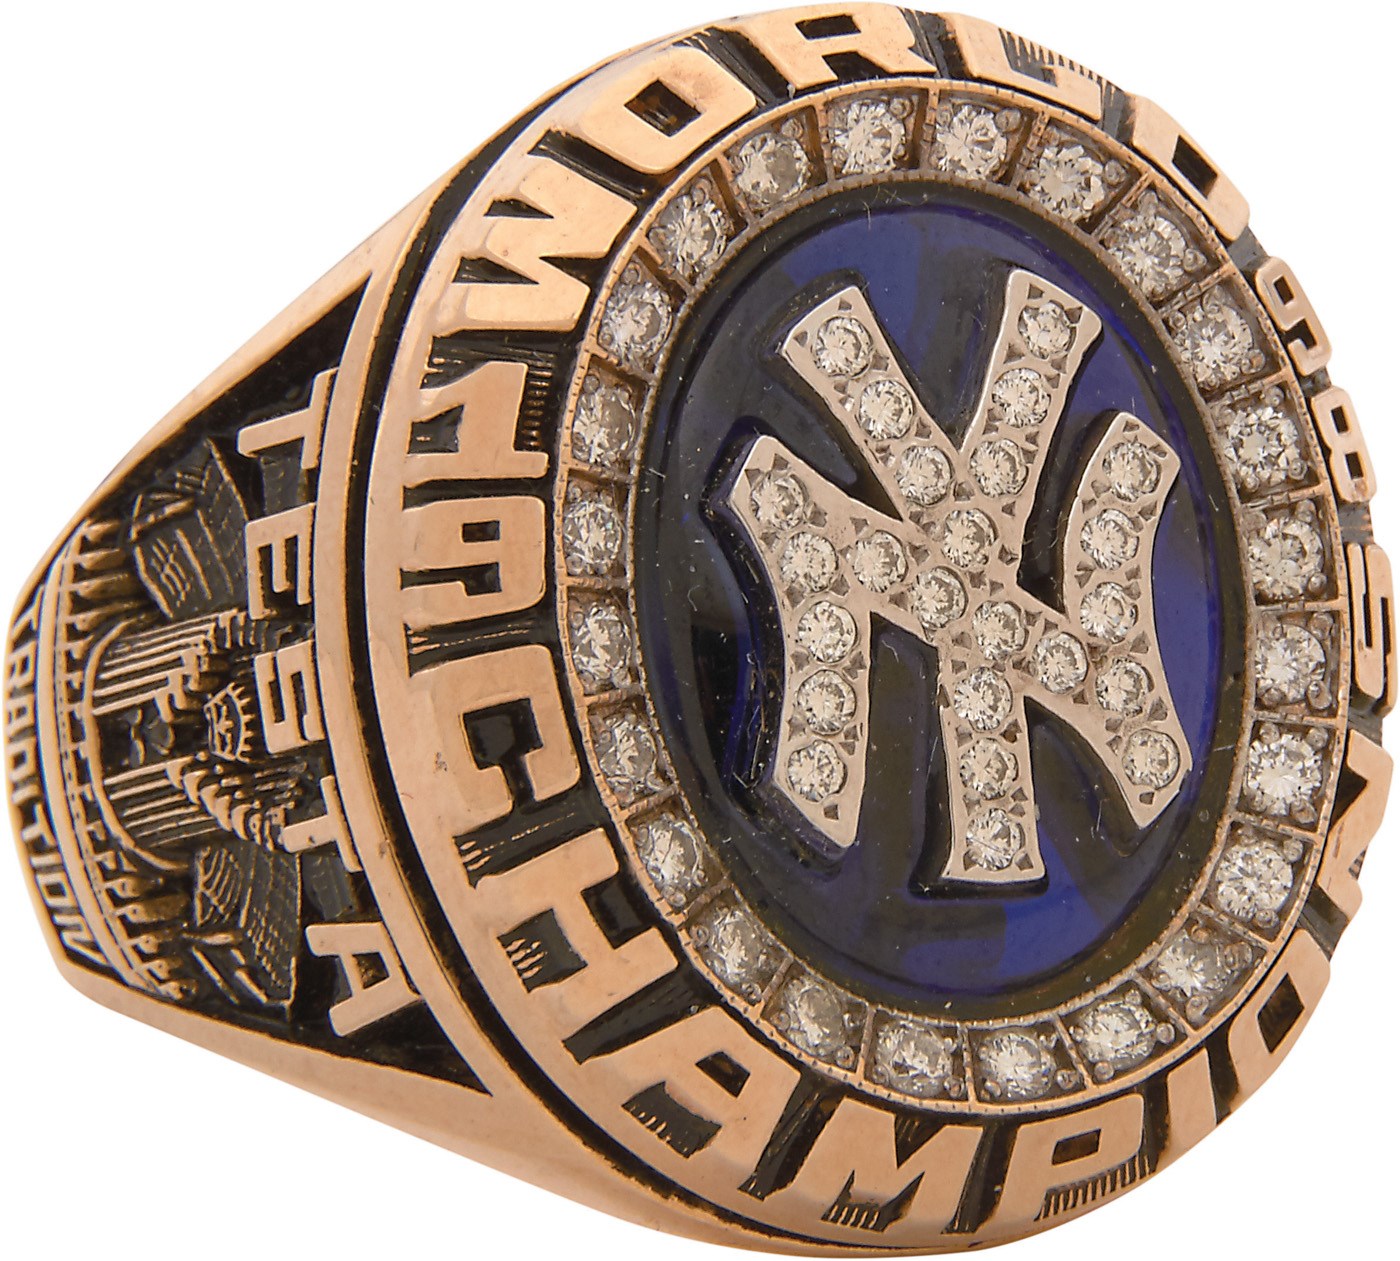 Sports Rings And Awards - 1998 New York Yankees World Series Championship Ring